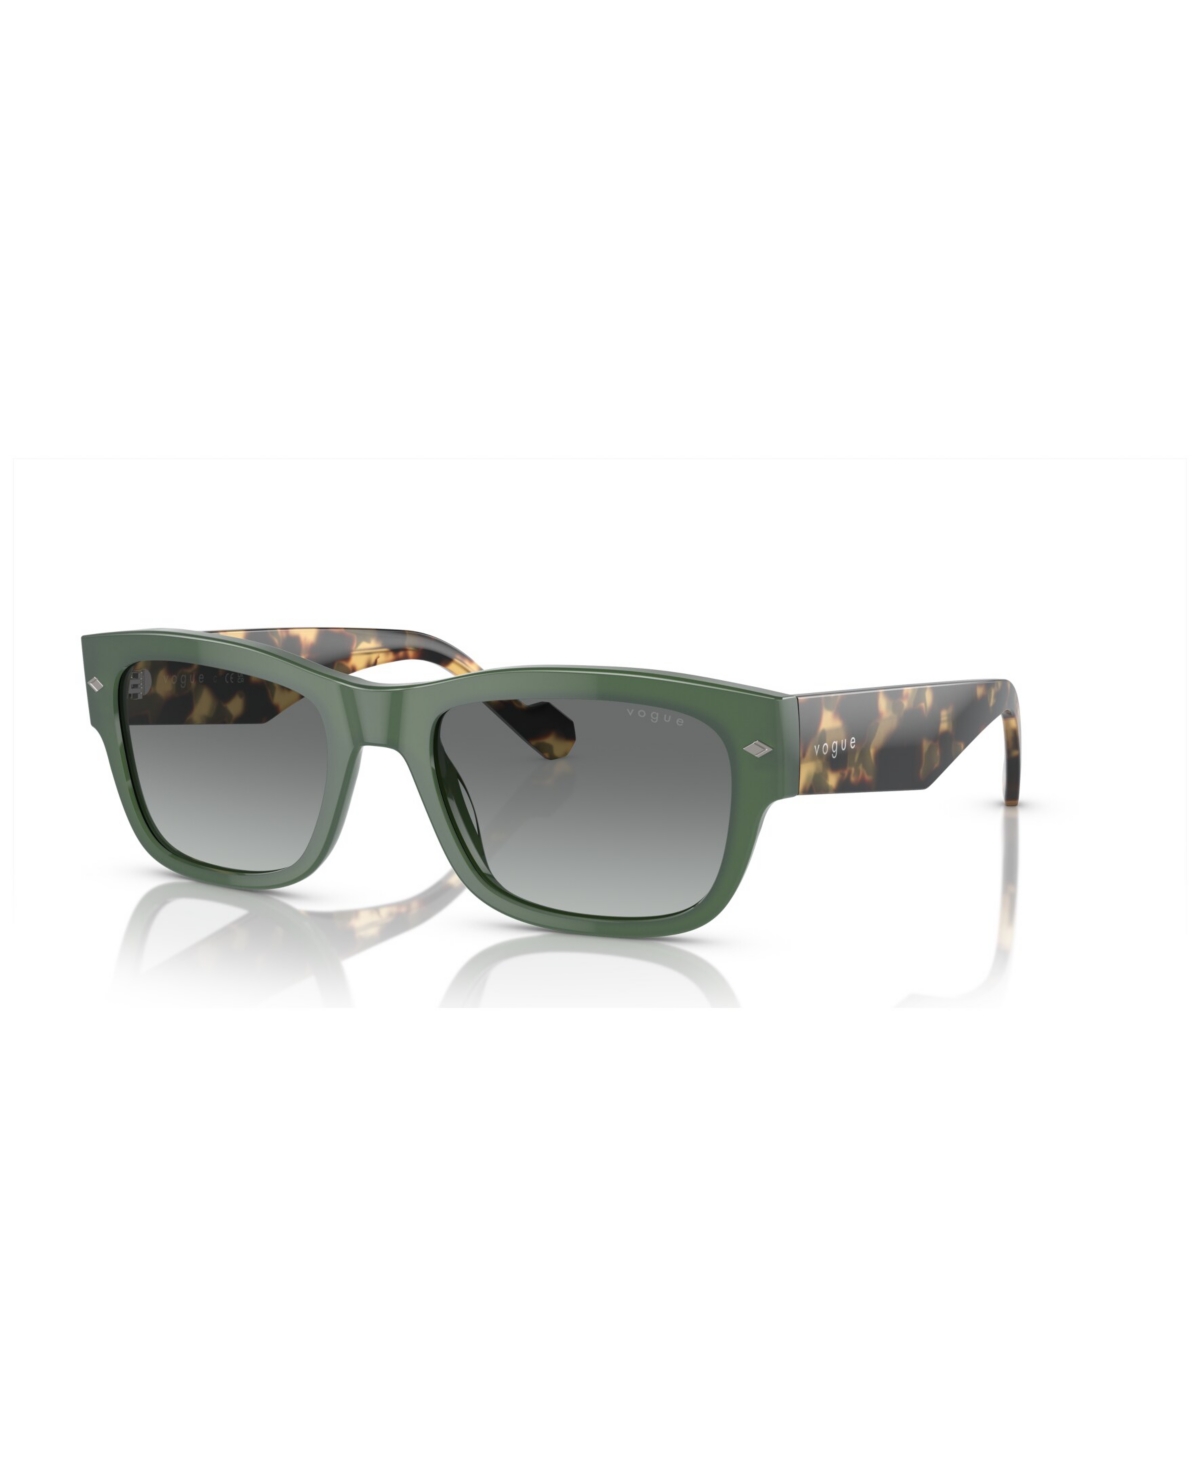 Men's Sunglasses, Gradient VO5530S - Full Dusty Green